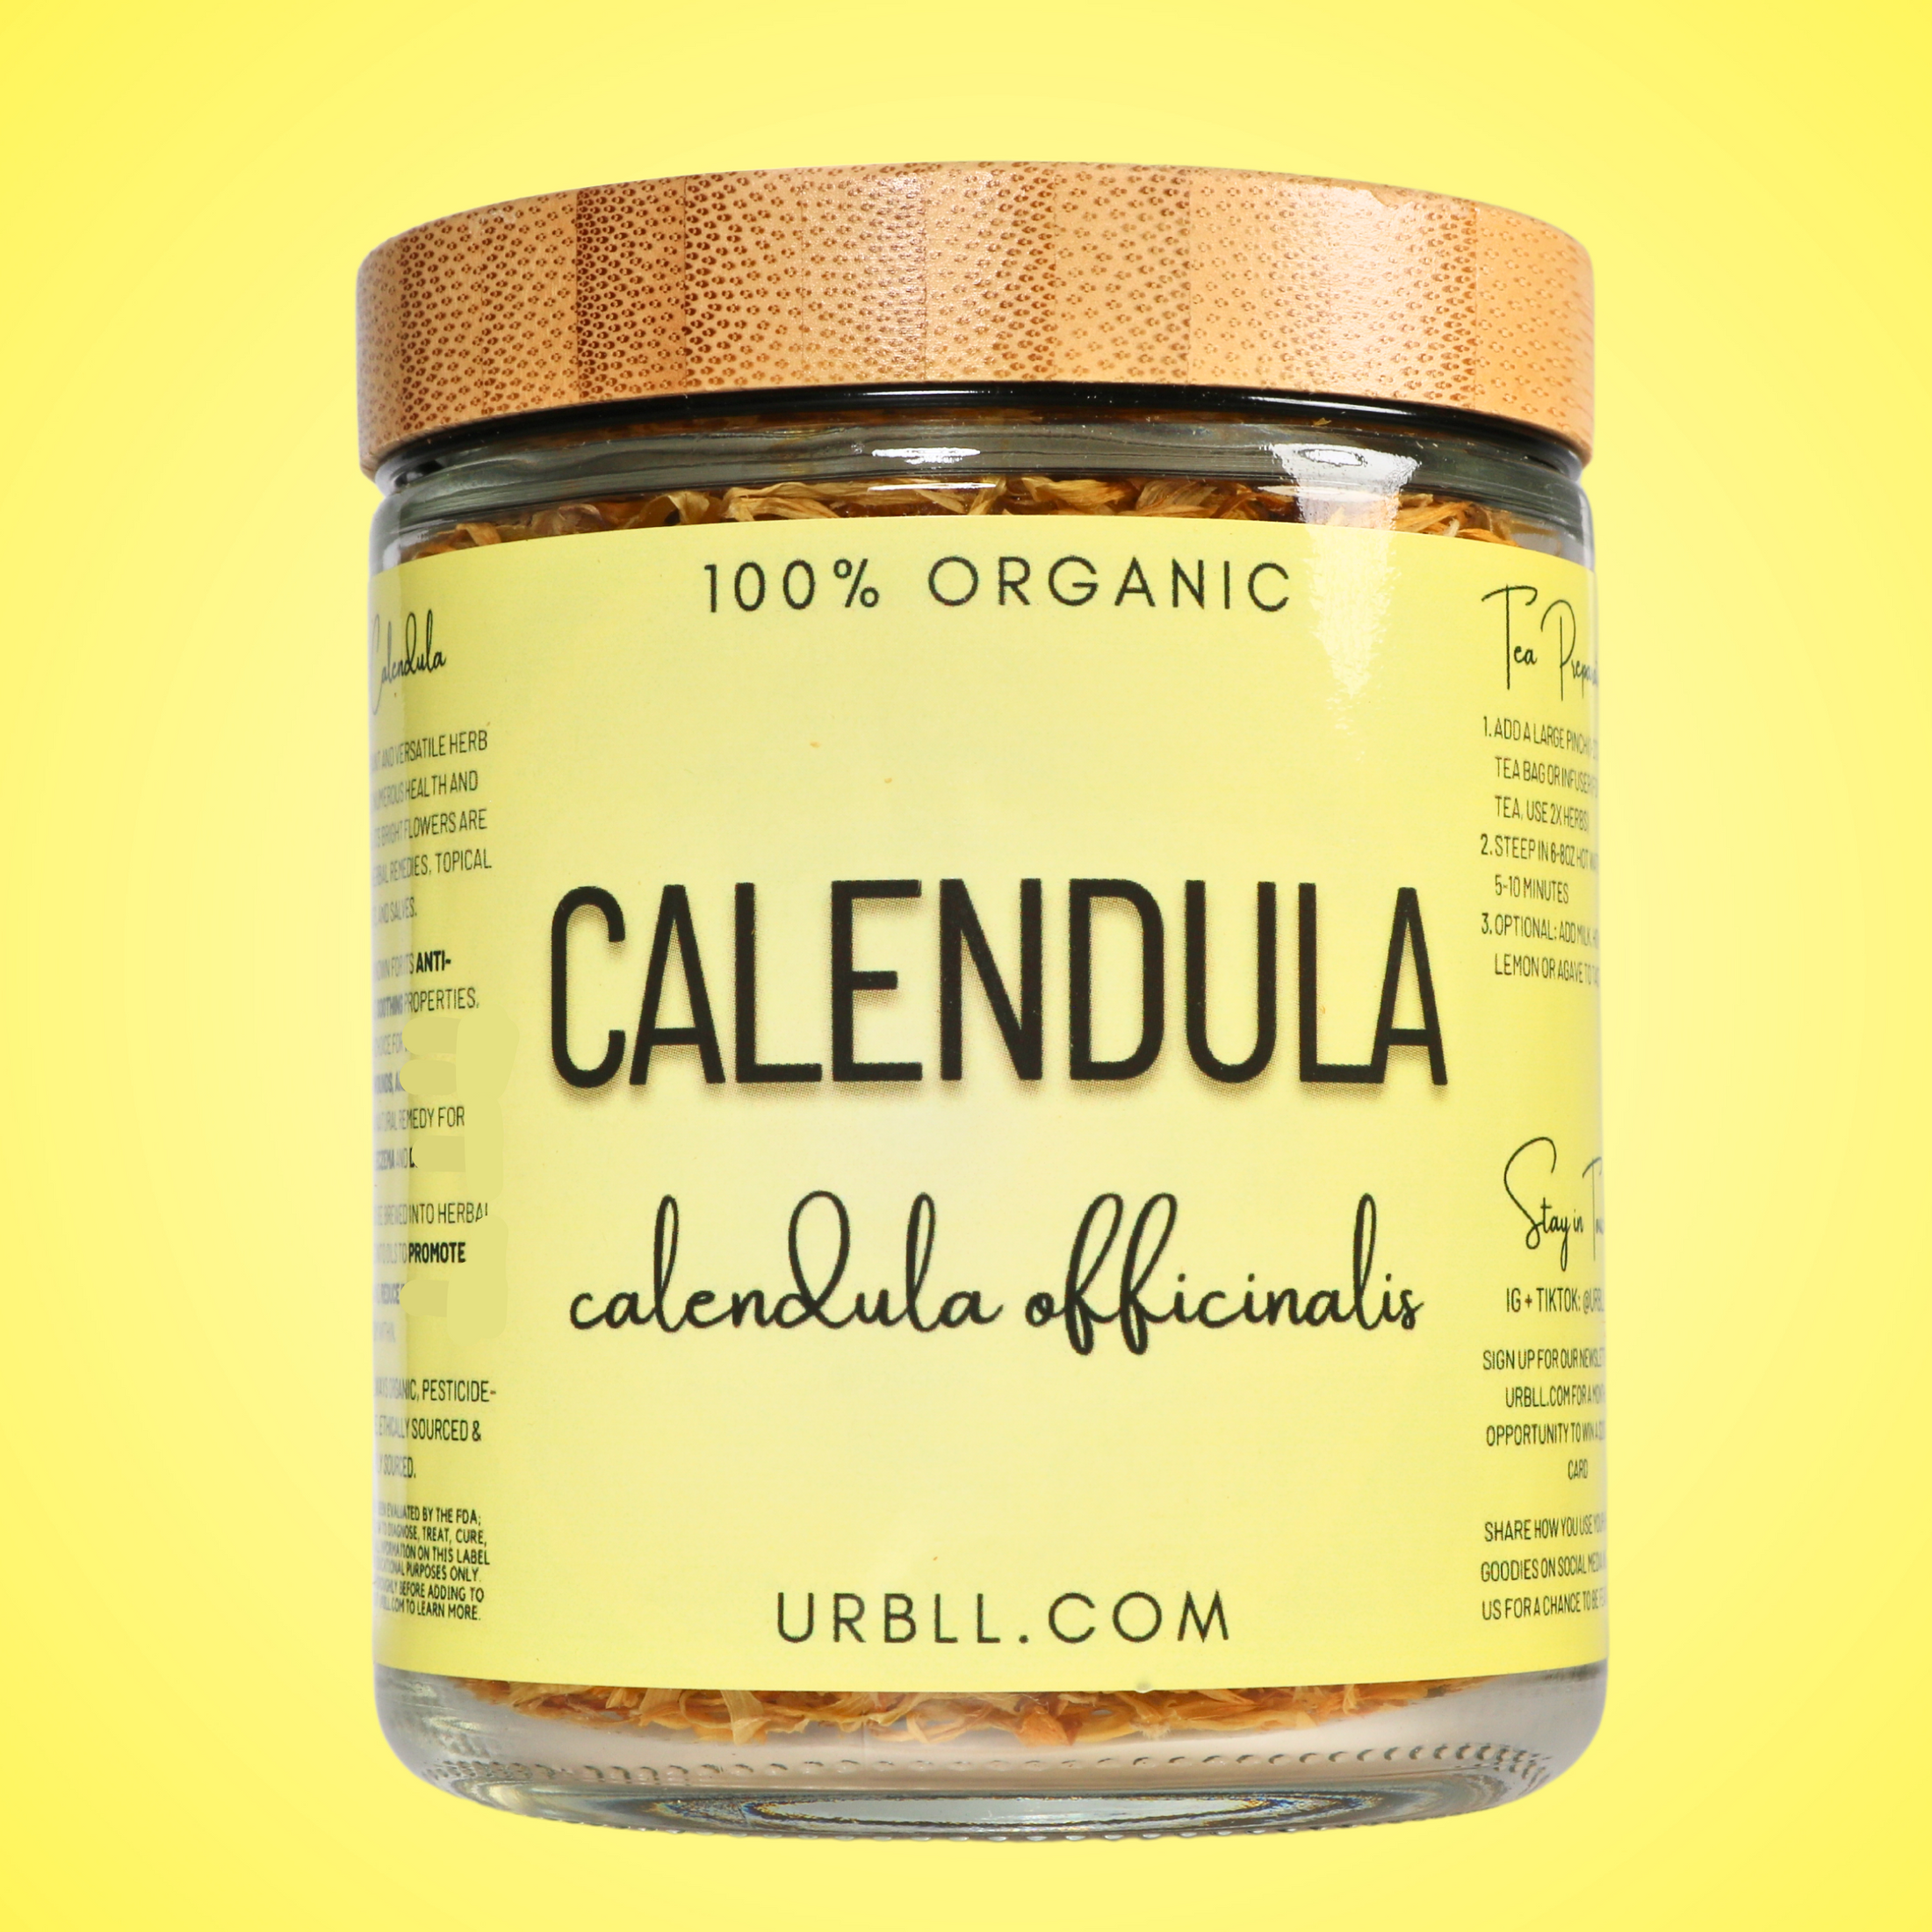 Calendula - Organic